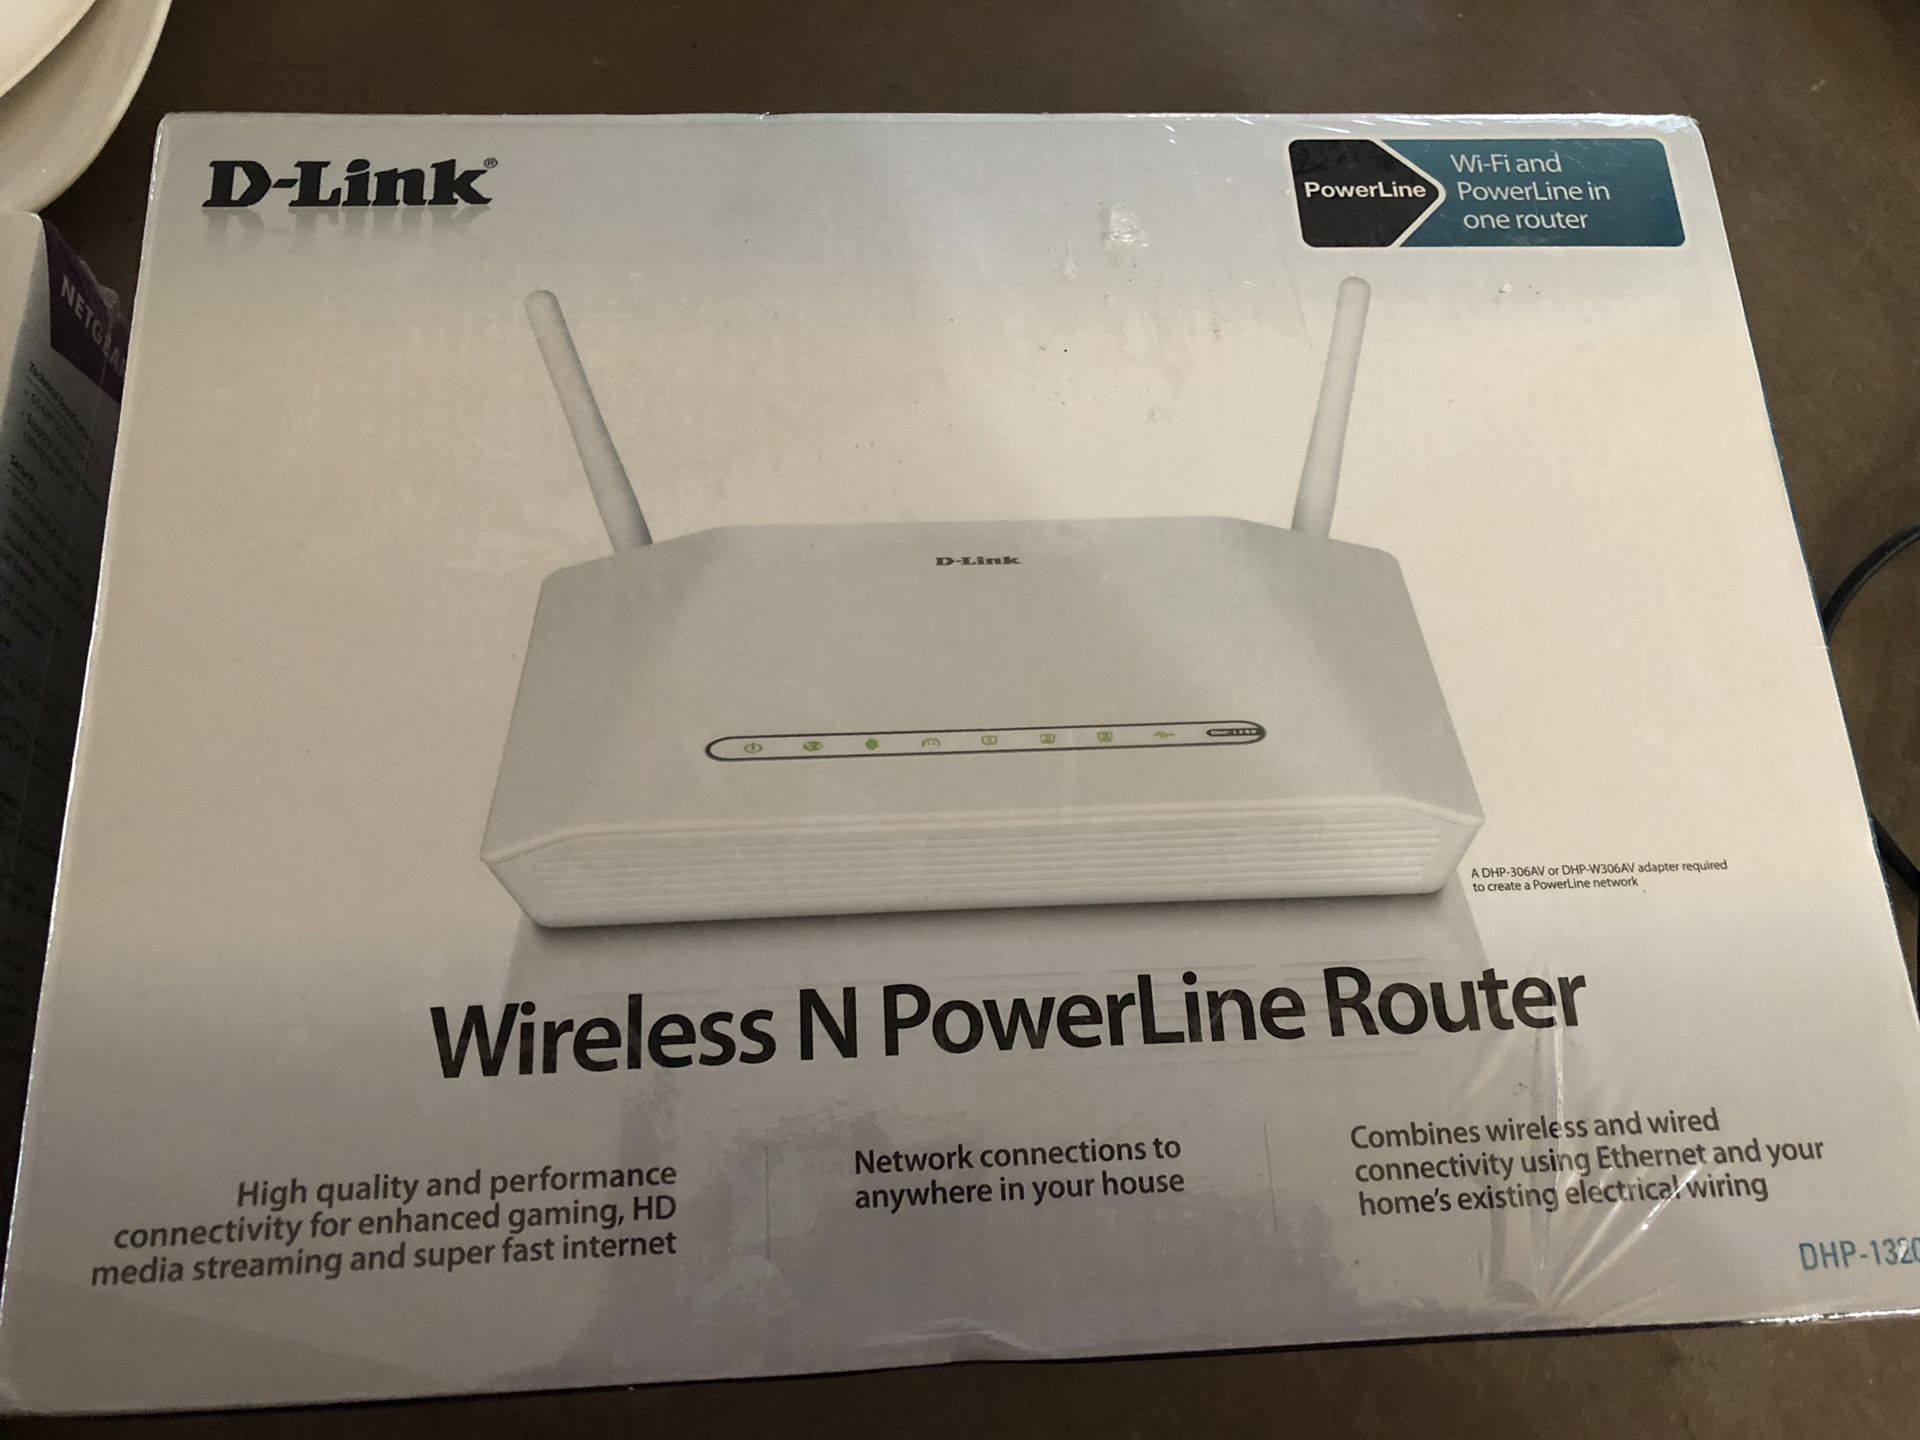 Brand new DLink wireless N power line router